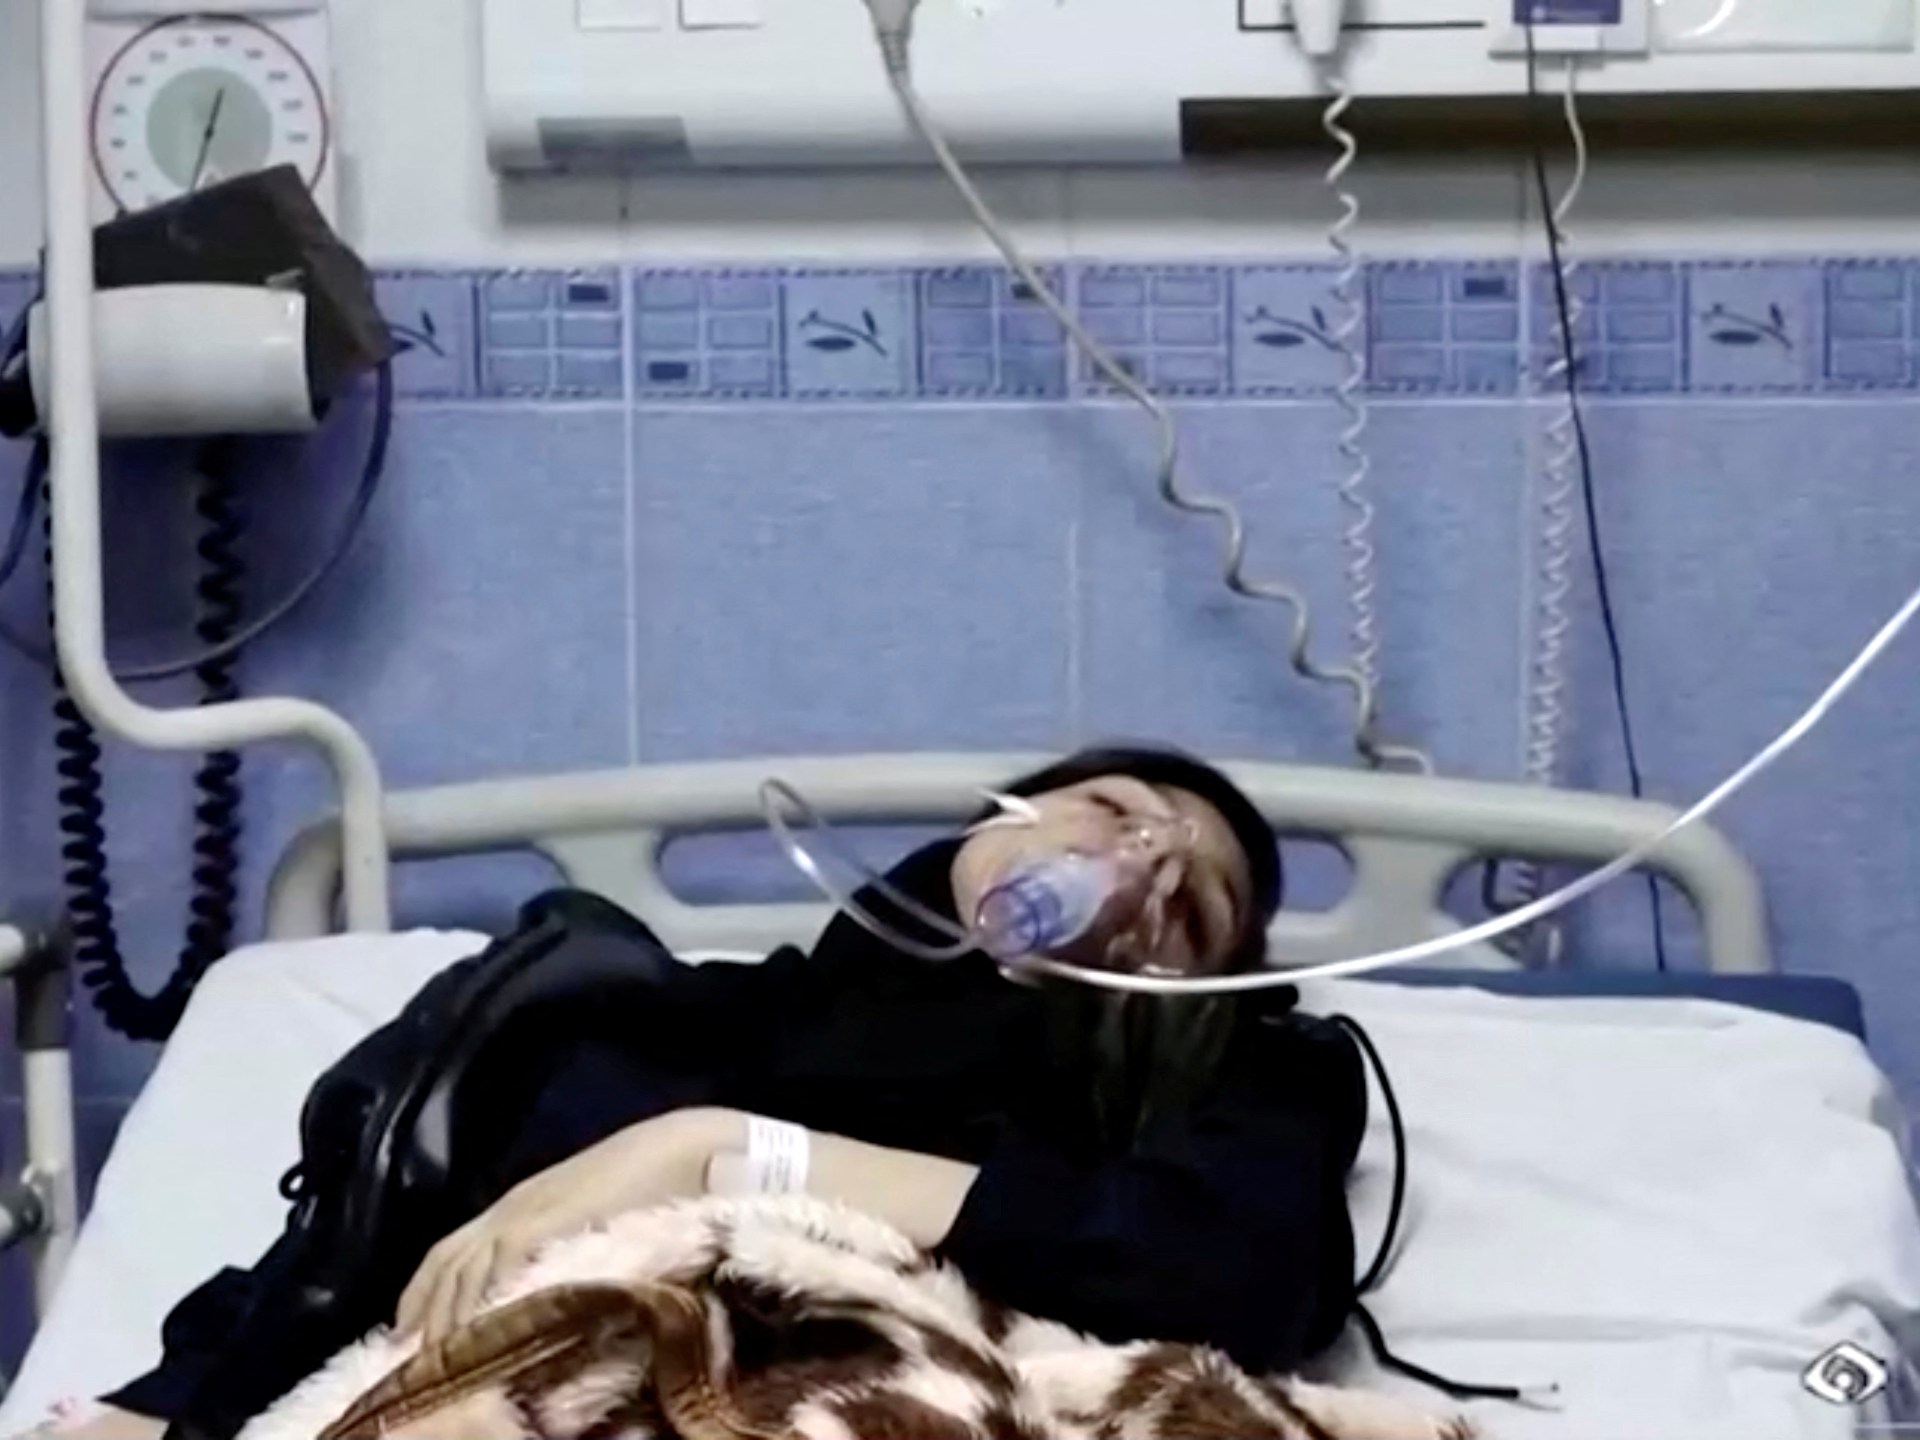 Schoolgirls in Iran hospitalised after suspected poisonings | Health News